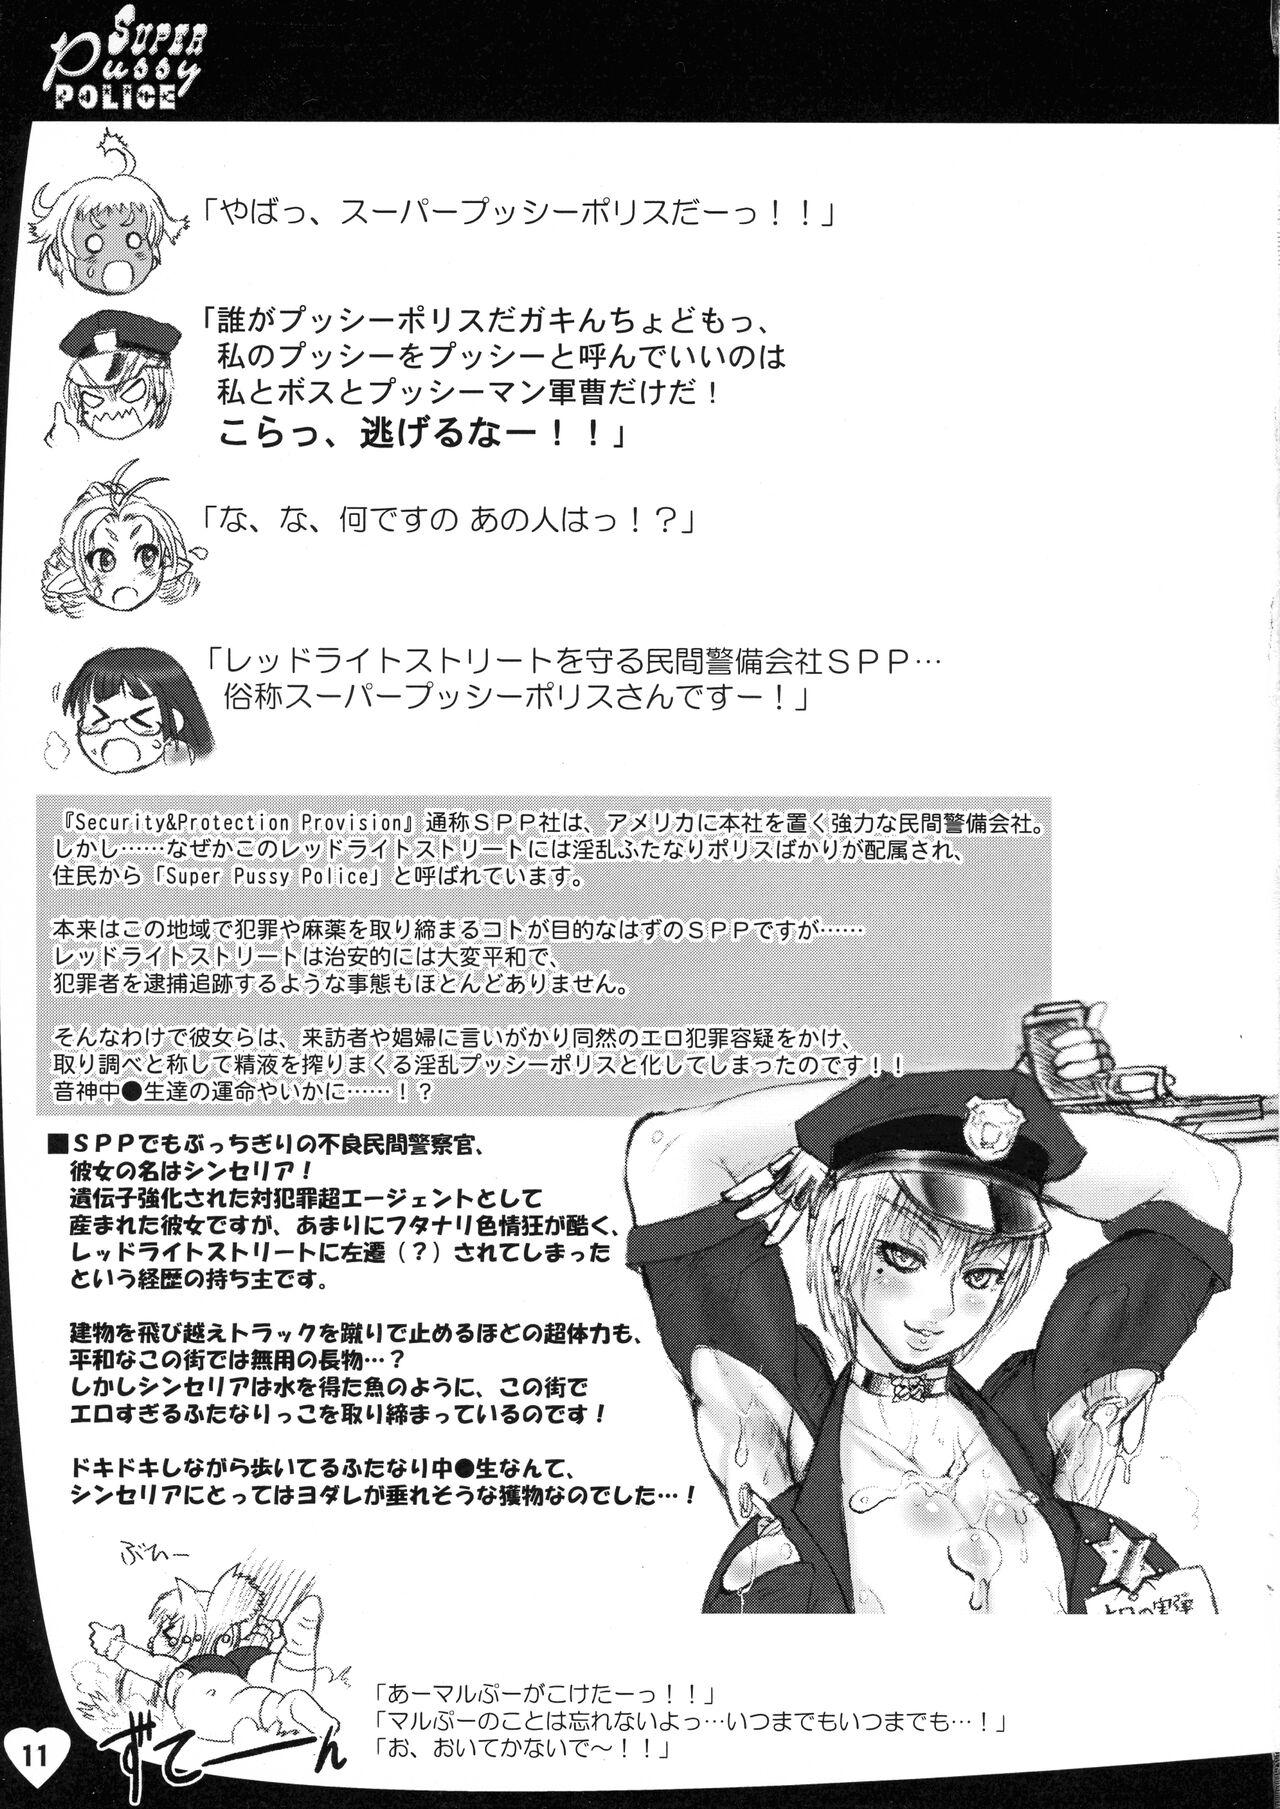 Old Young SPP Super Pussy Police VS Bakuniku Chuugakusei Penetration - Page 11